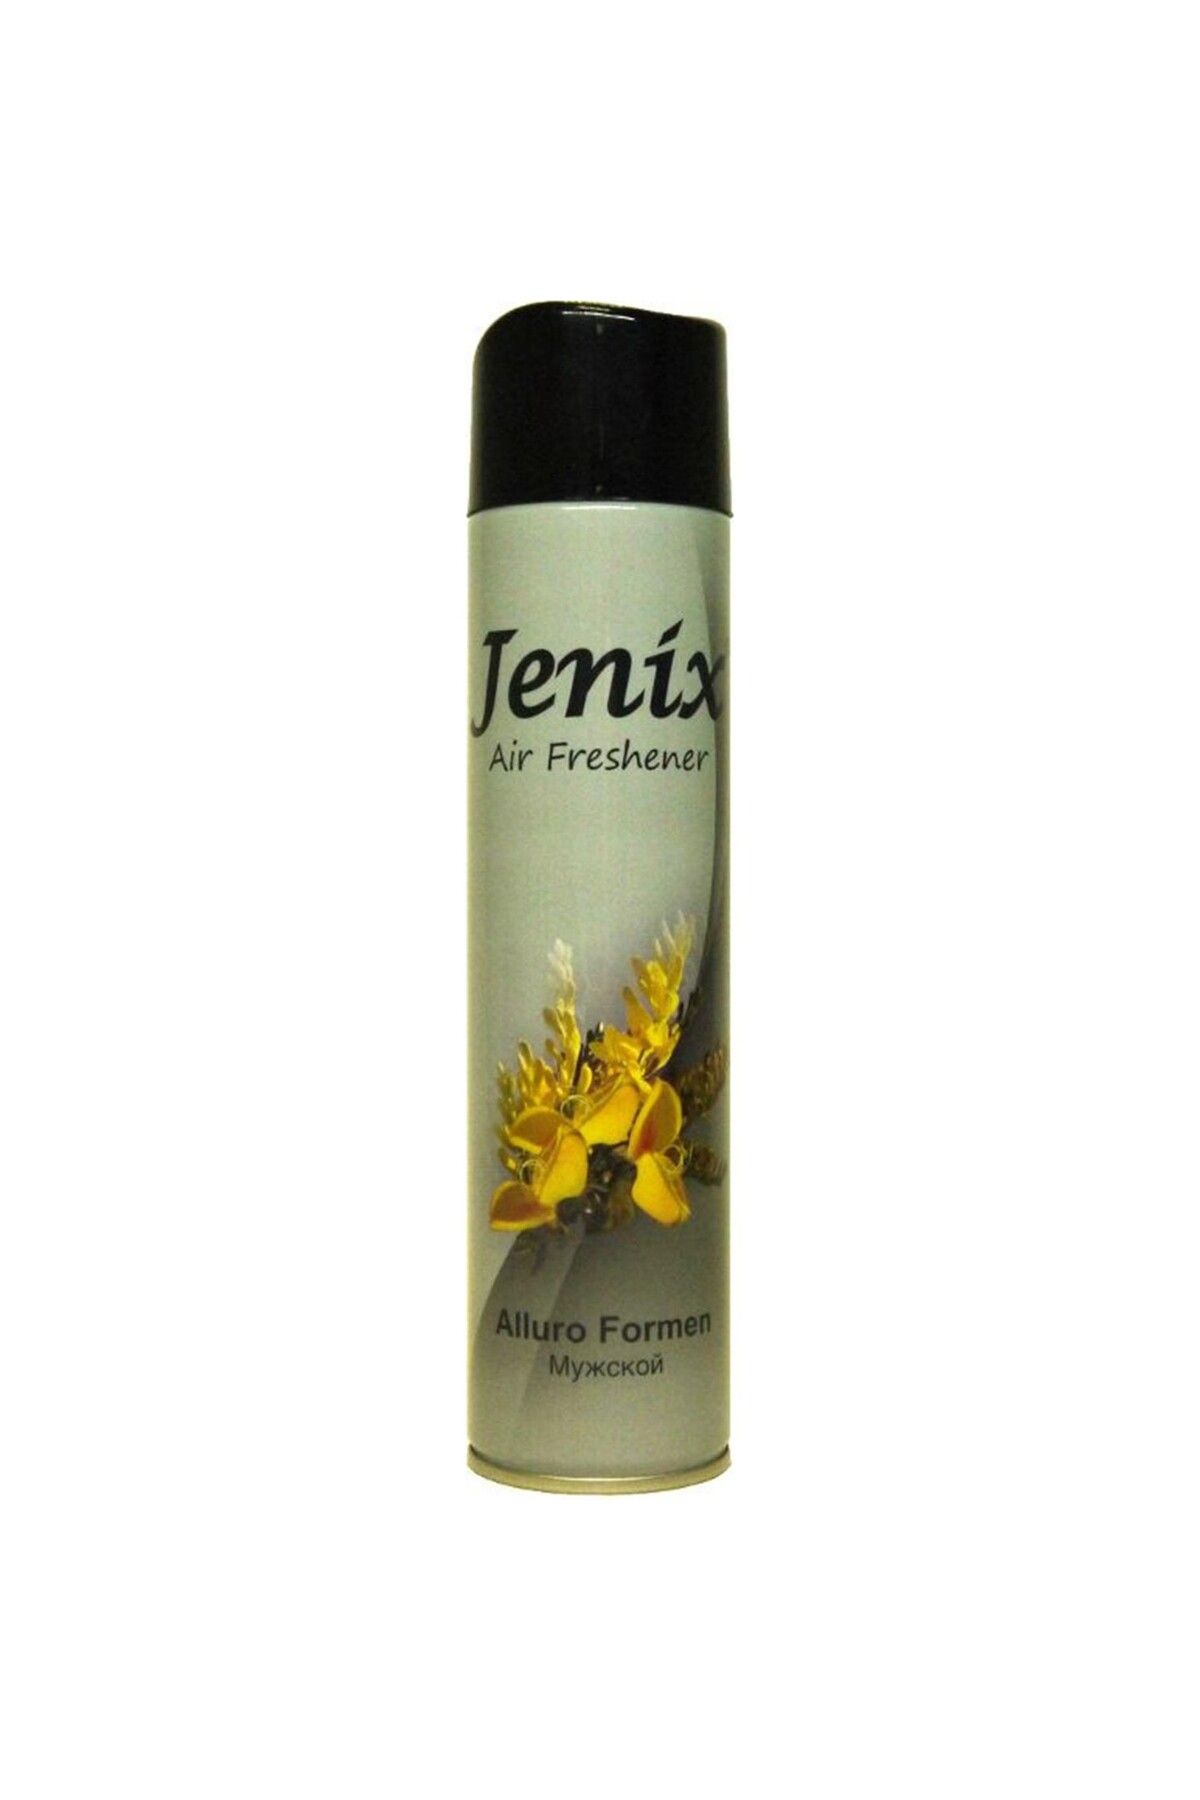 Jenix Air Freshener Alluro Formen Sprey Deodorant Oda Ortam Kokusu Parfümü - 300 ml